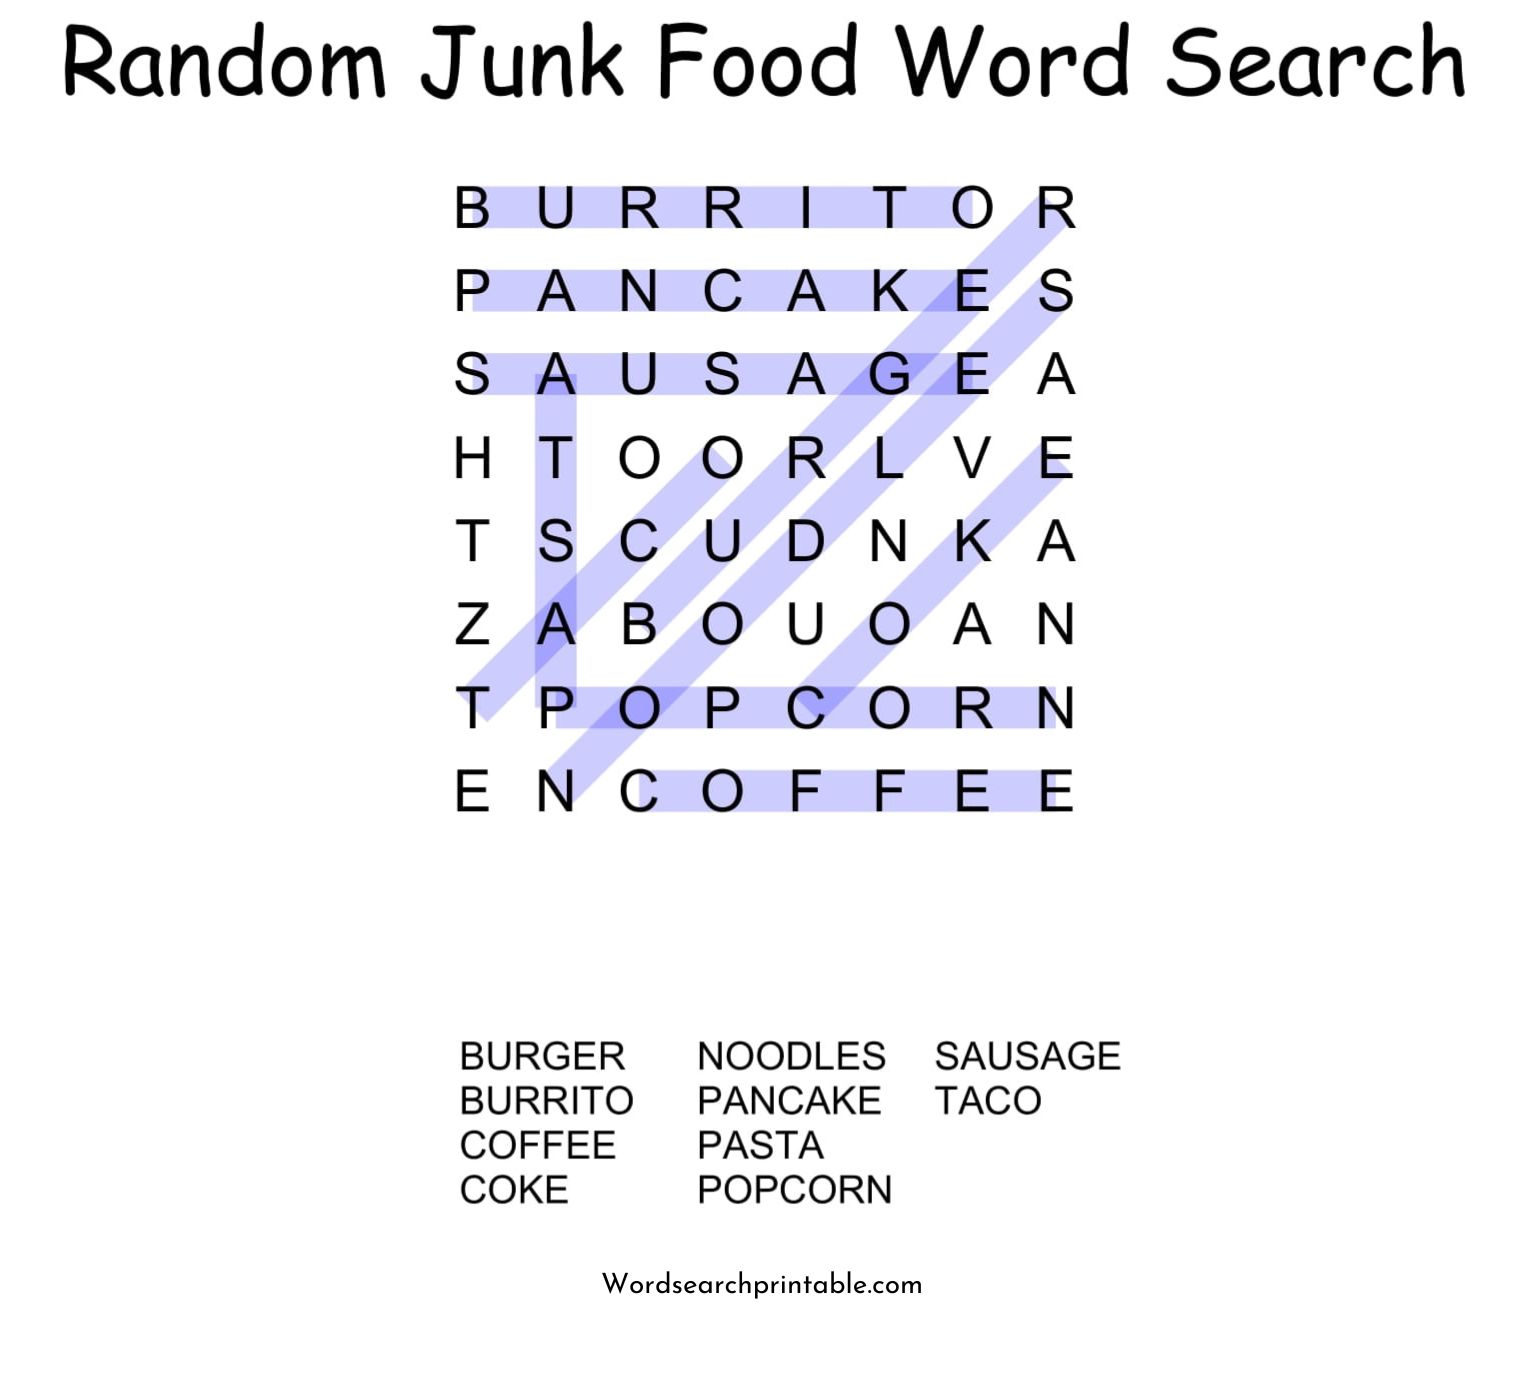 random junk food word search puzzle solution